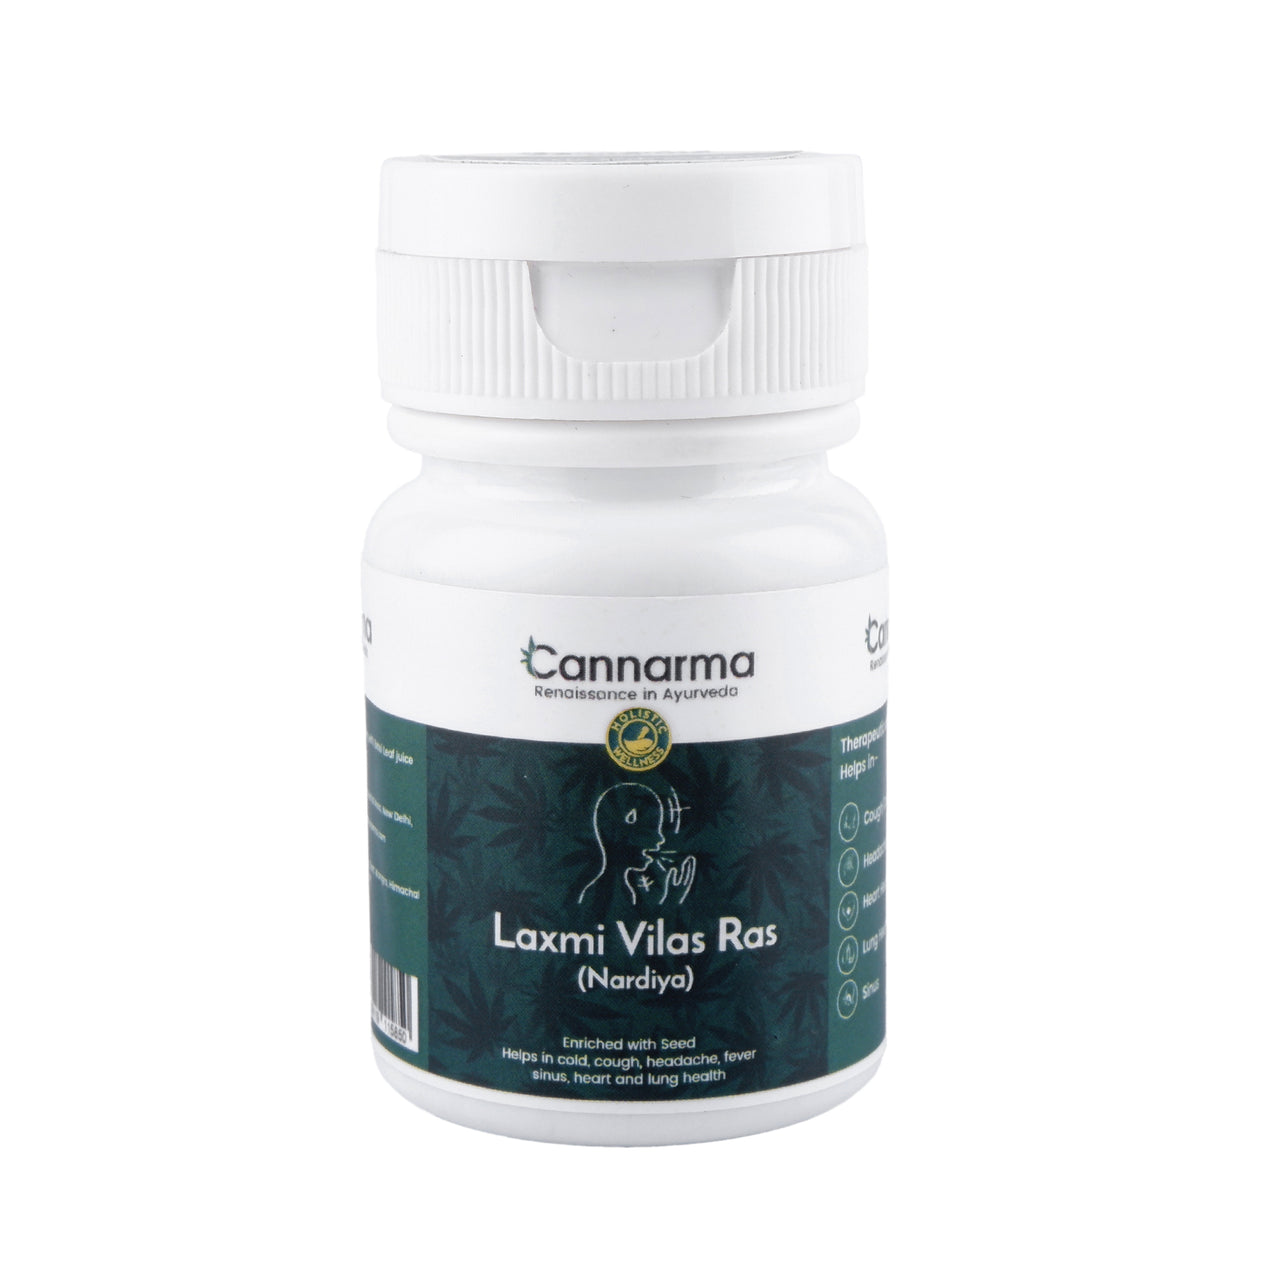 Cannarma LaxmiVilas Ras Tablet | For Cough, Cold, Headache & Fever